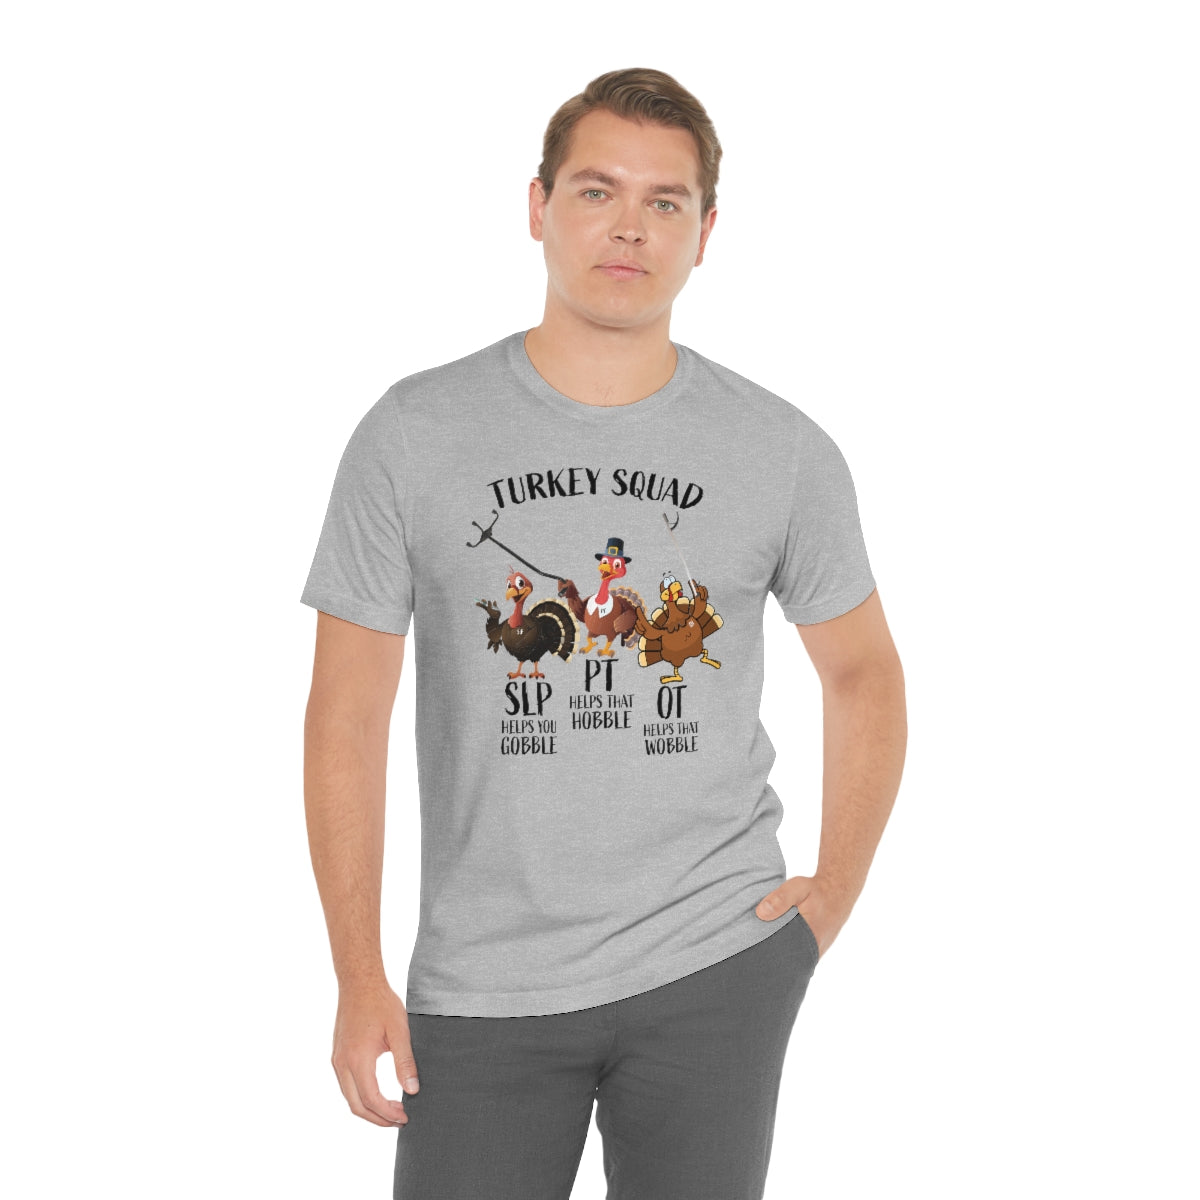 Turkey Squad, OT, PT and SLP Therapy Shirt Halloween Fall Unisex Shirt